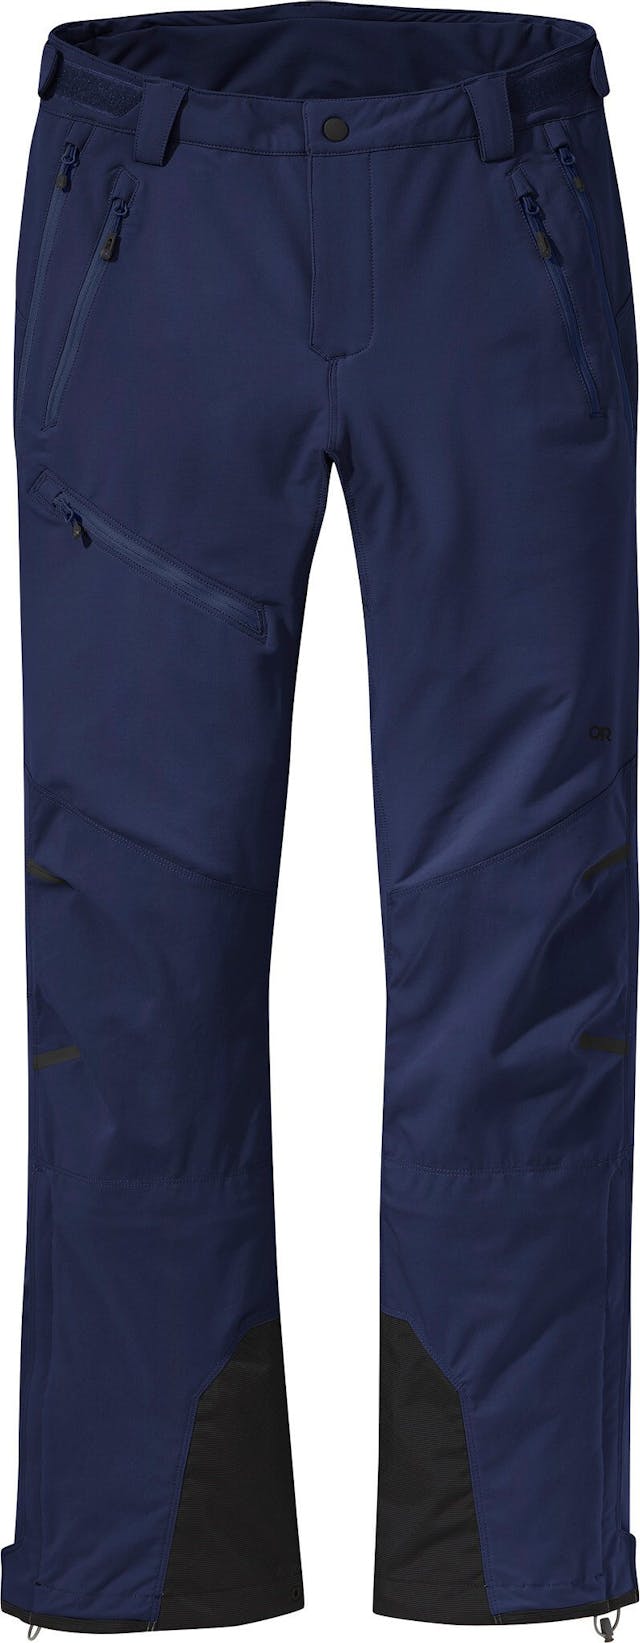 Product image for Trailbreaker II Pants - Women's